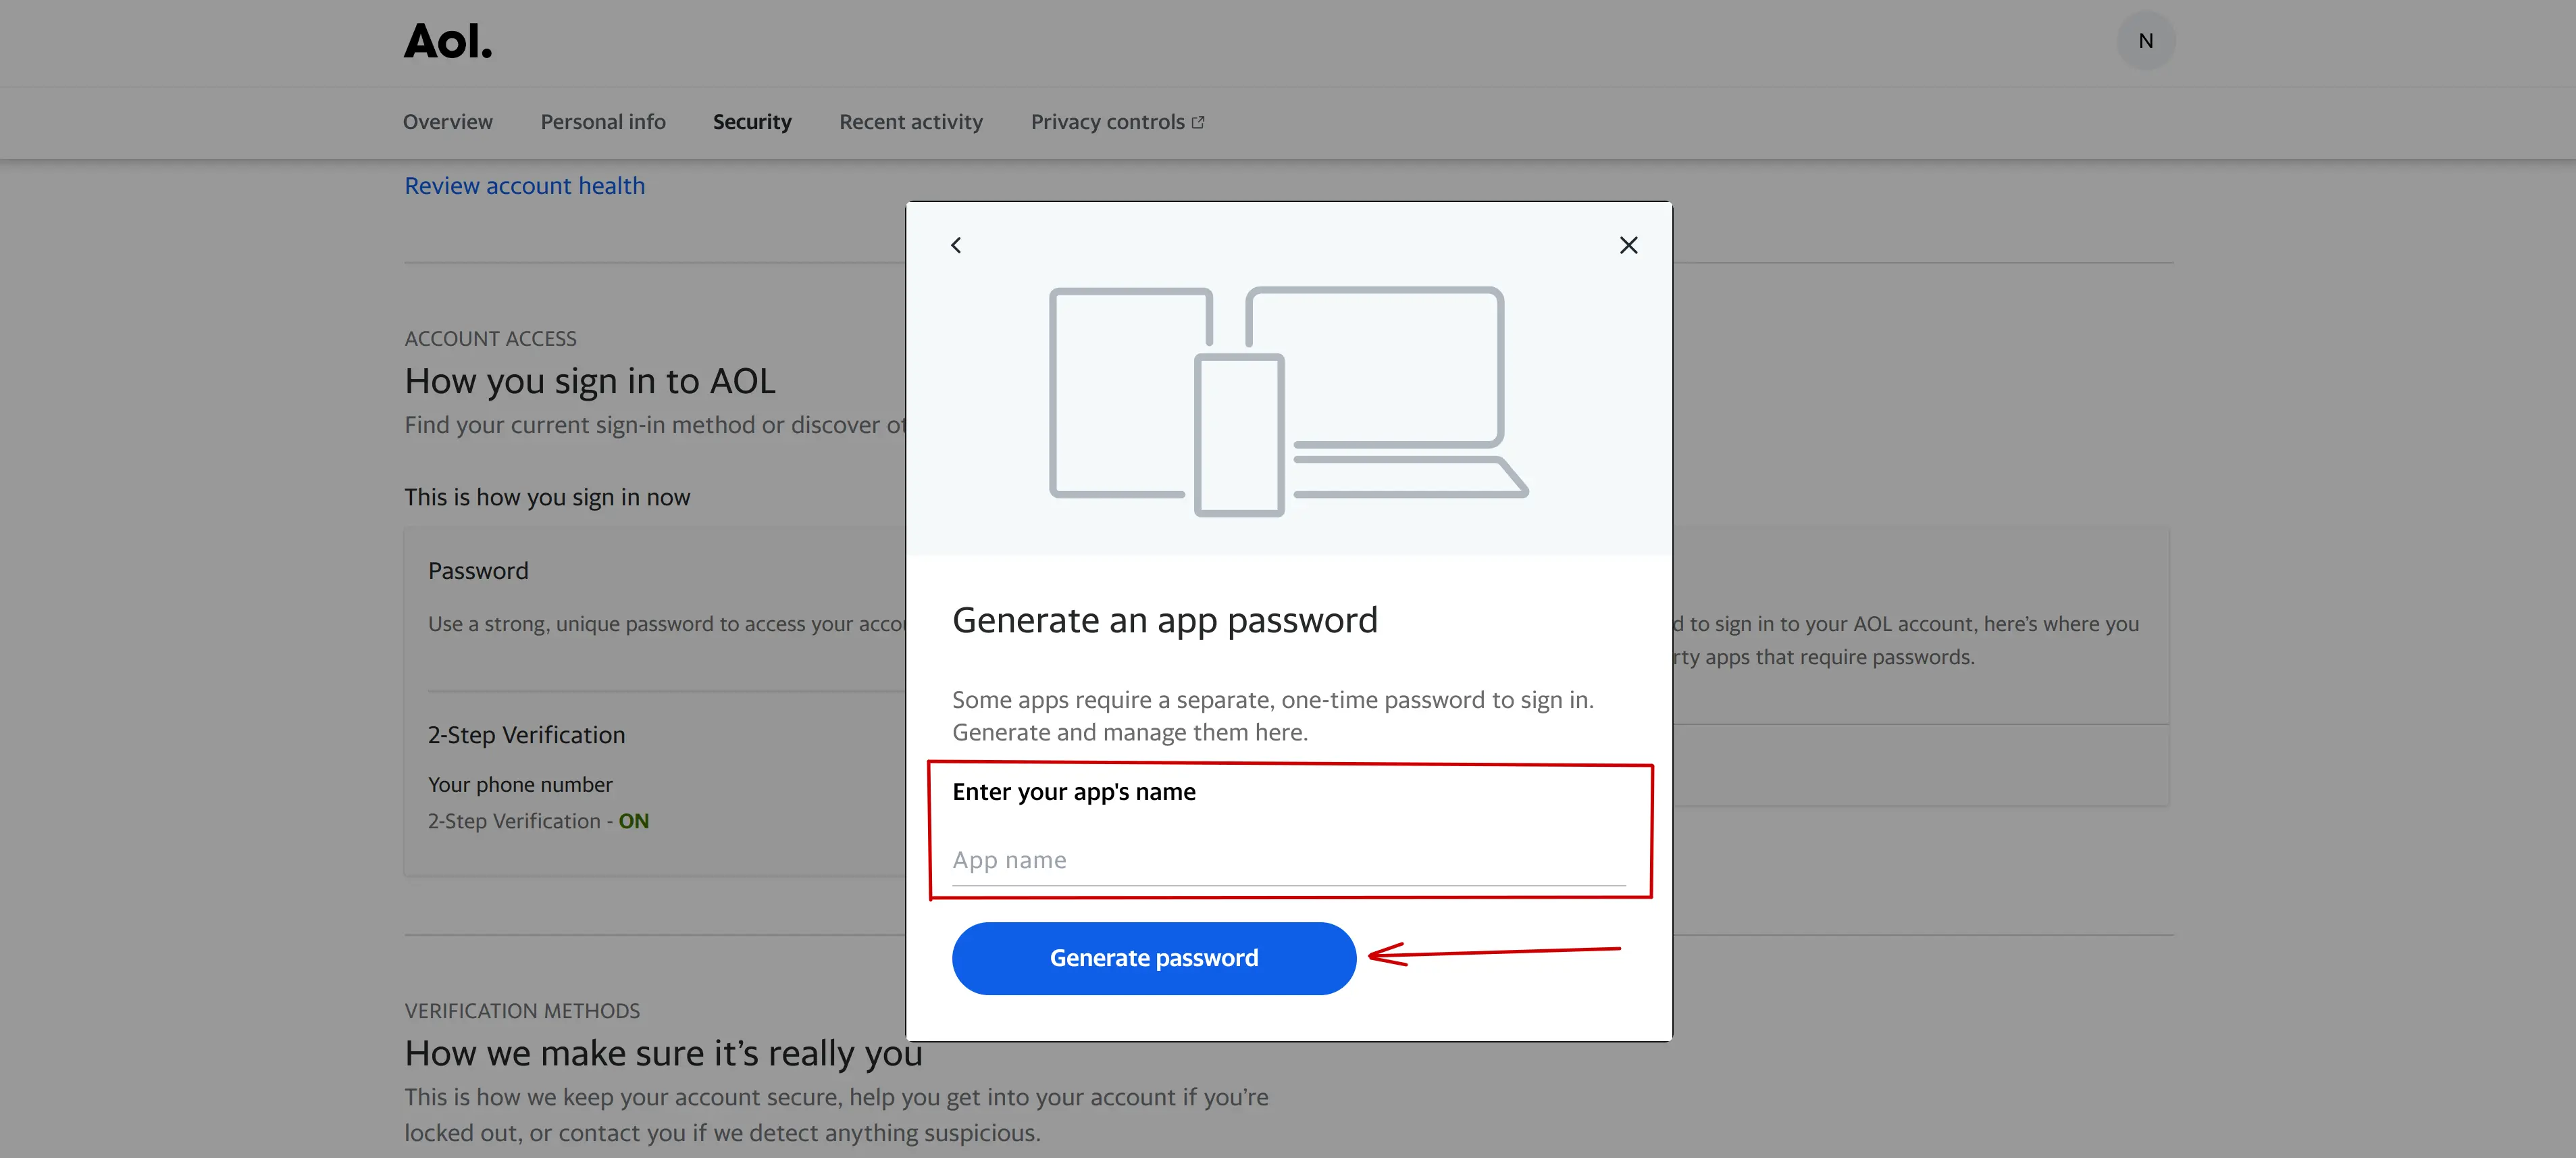 aol-app-password-first-step-app-name